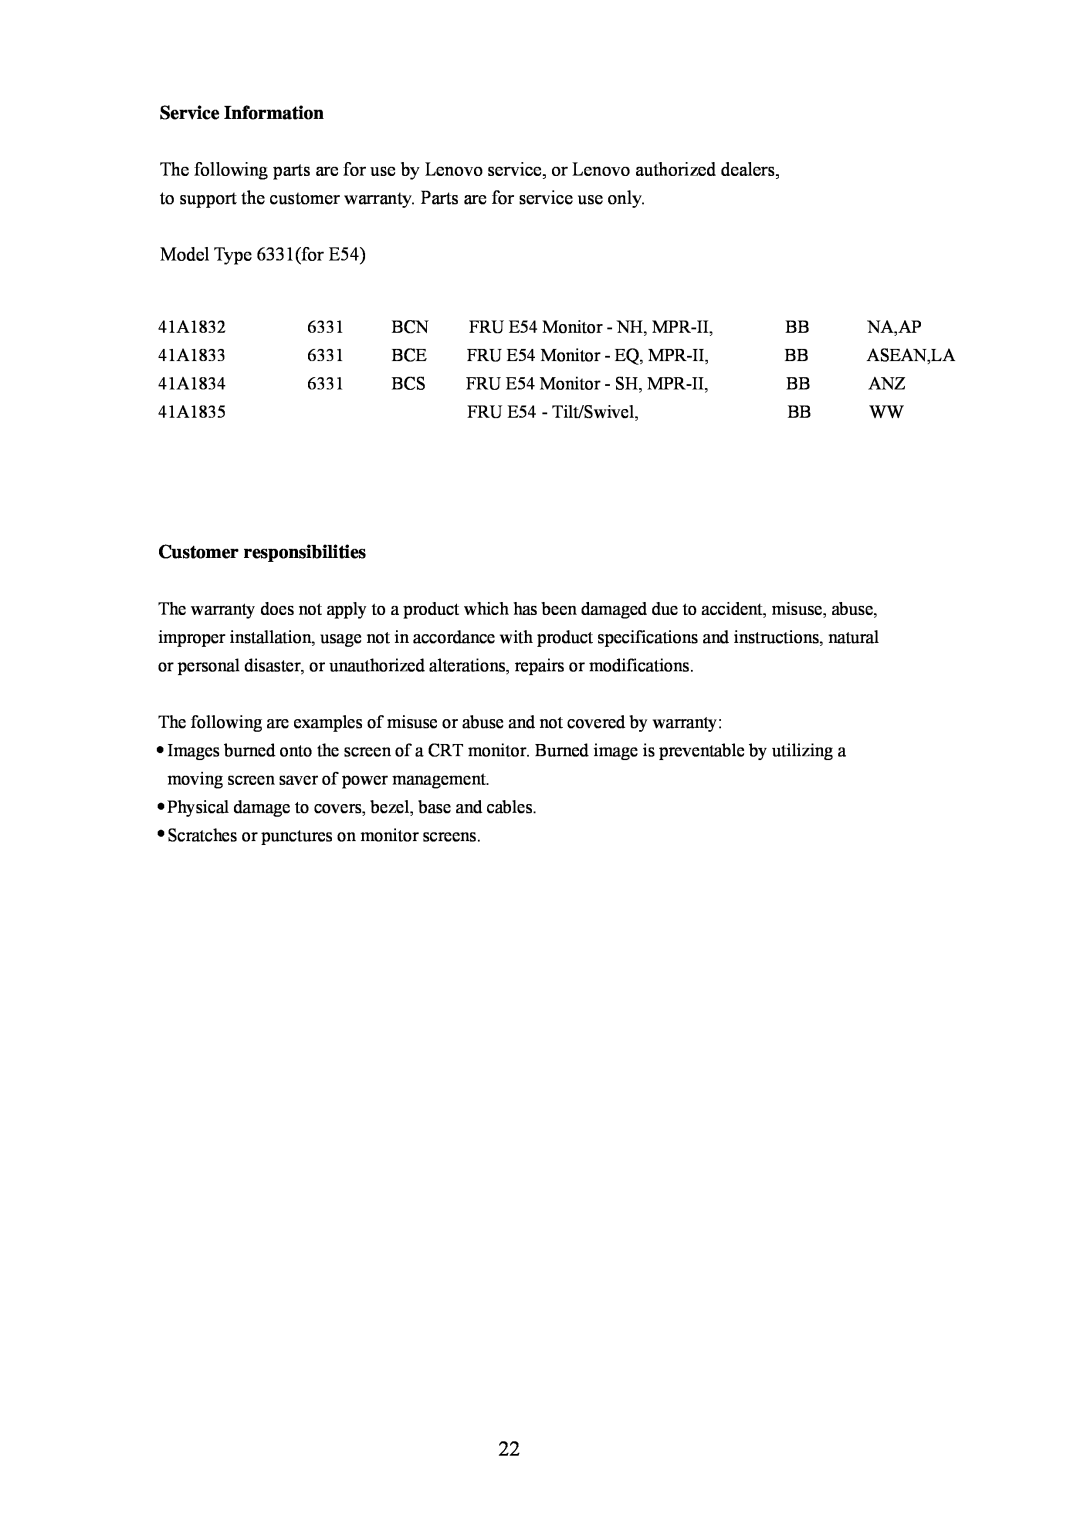 Lenovo manual Service Information, Model Type 6331for E54, Customer responsibilities 